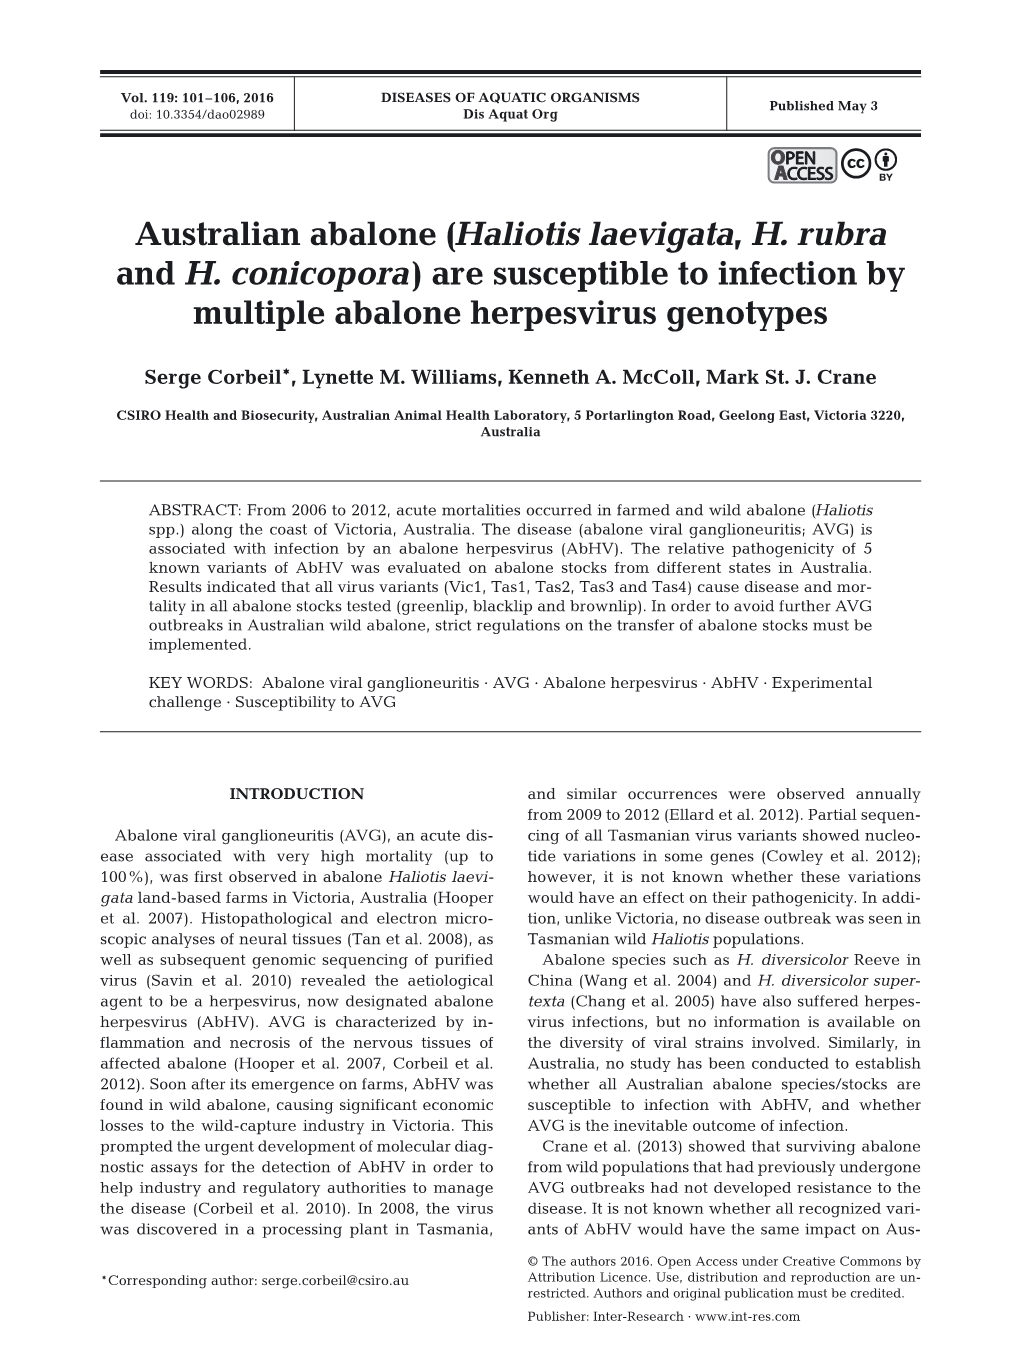 Australian Abalone (Haliotis Laevigata, H. Rubra and H